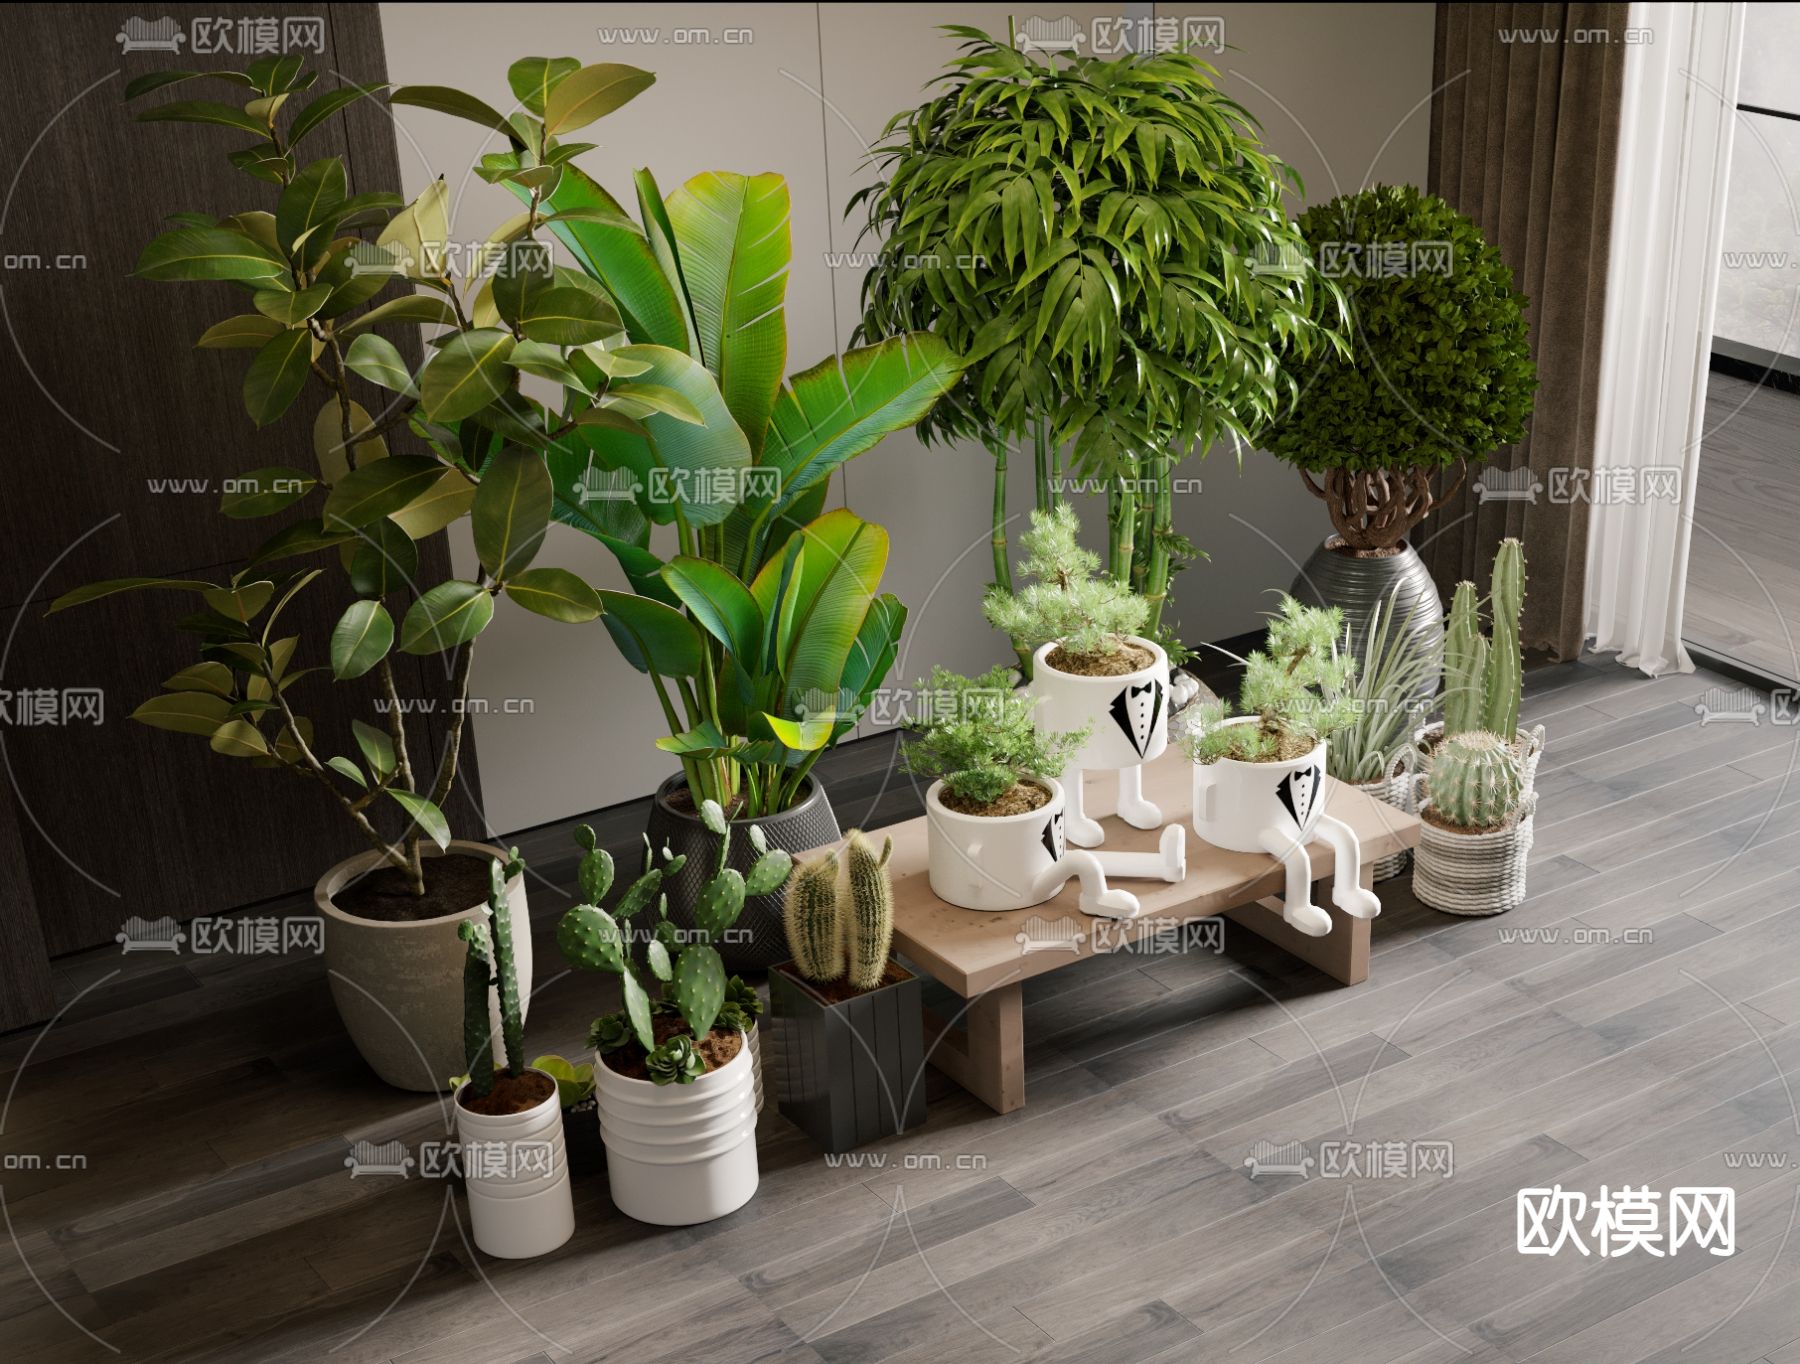 Plant – VRAY / CORONA – 3D MODEL – 481 - thumbnail 1